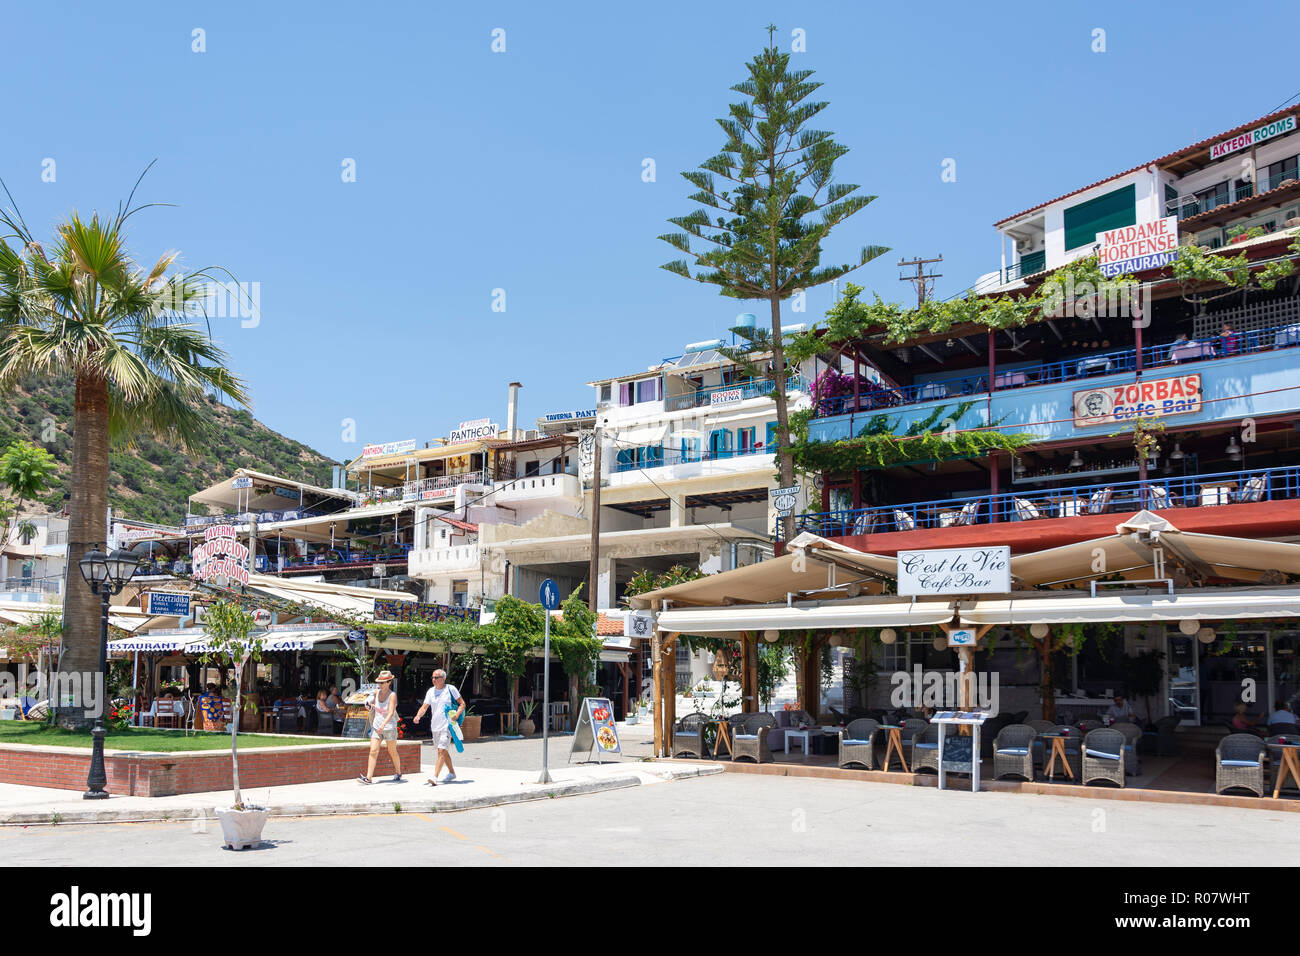 Tavernen am Hafen Promenade, Agia Galini, Rethimnon, Kreta (Kriti), Griechenland Stockfoto